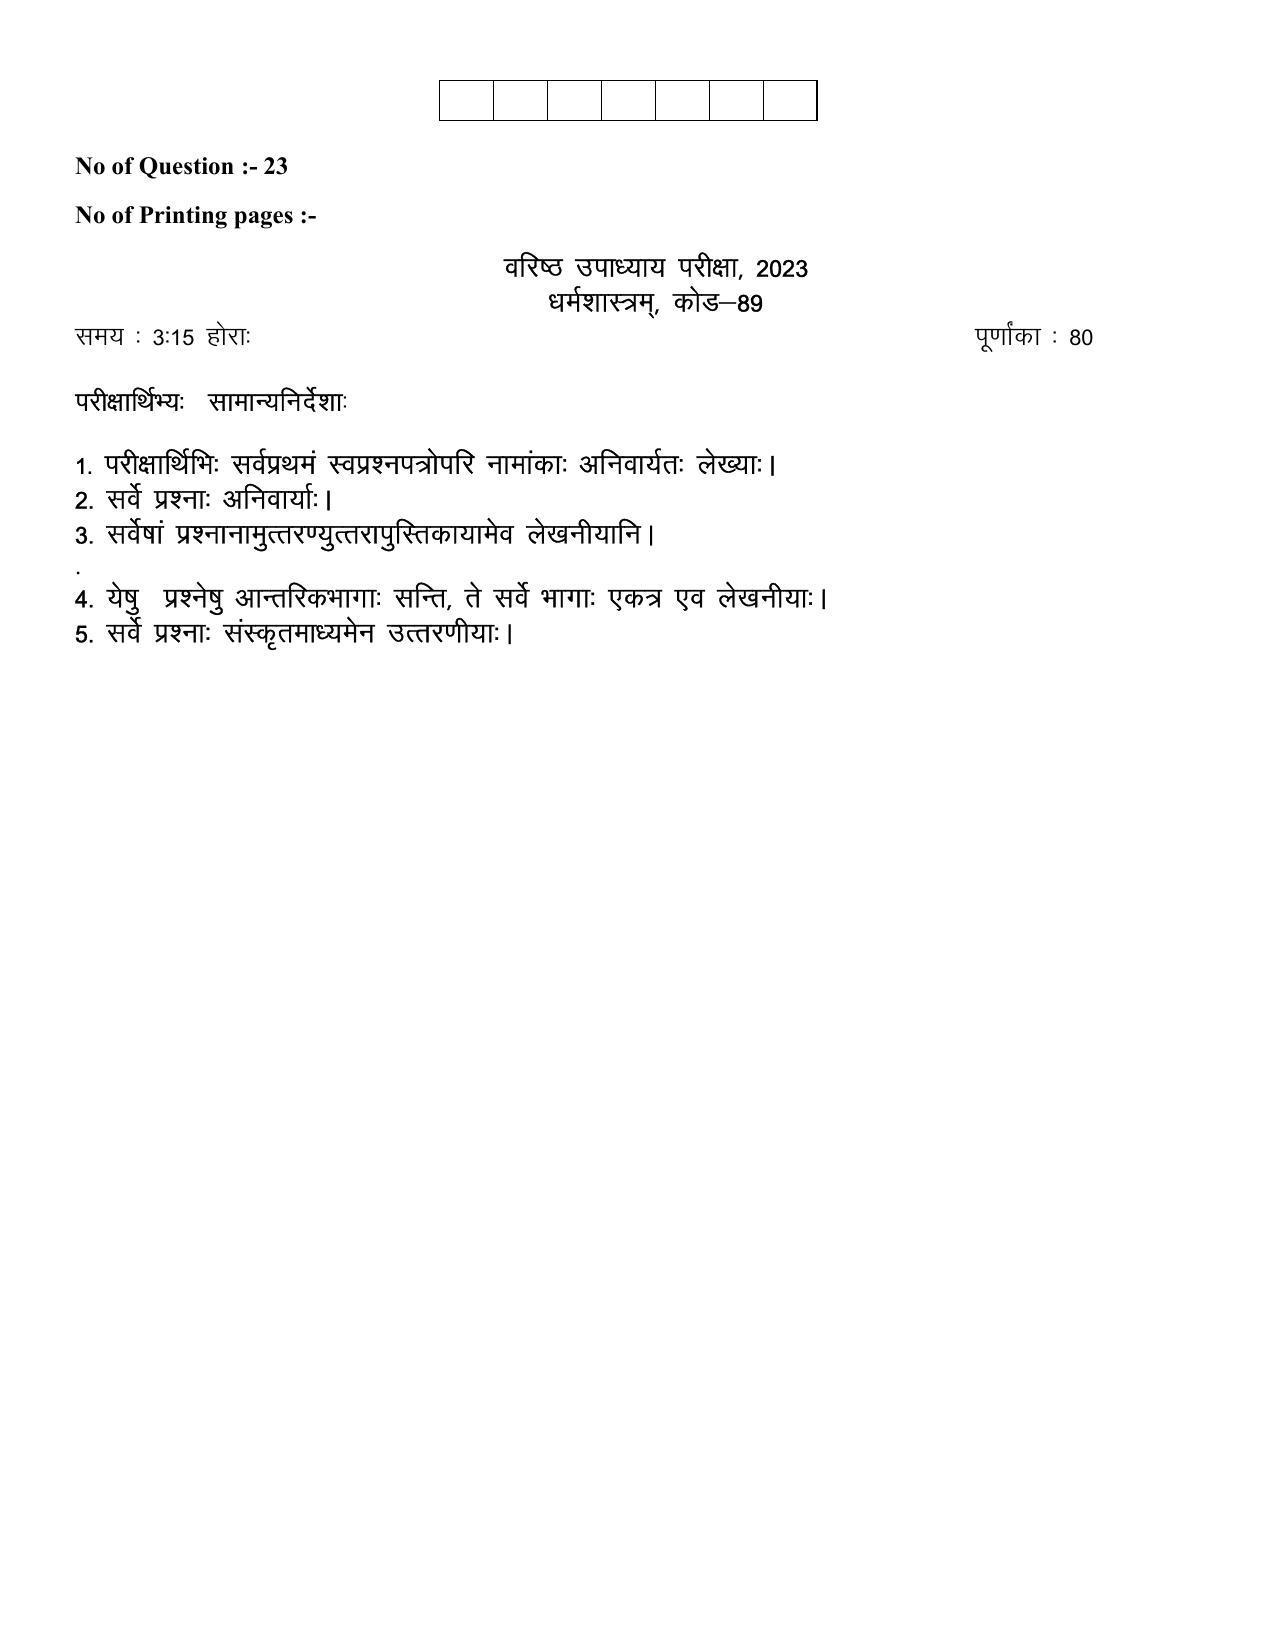 RBSE 2023 DHARAM SHASTRAM Varishtha Upadhyay Paper - Page 5